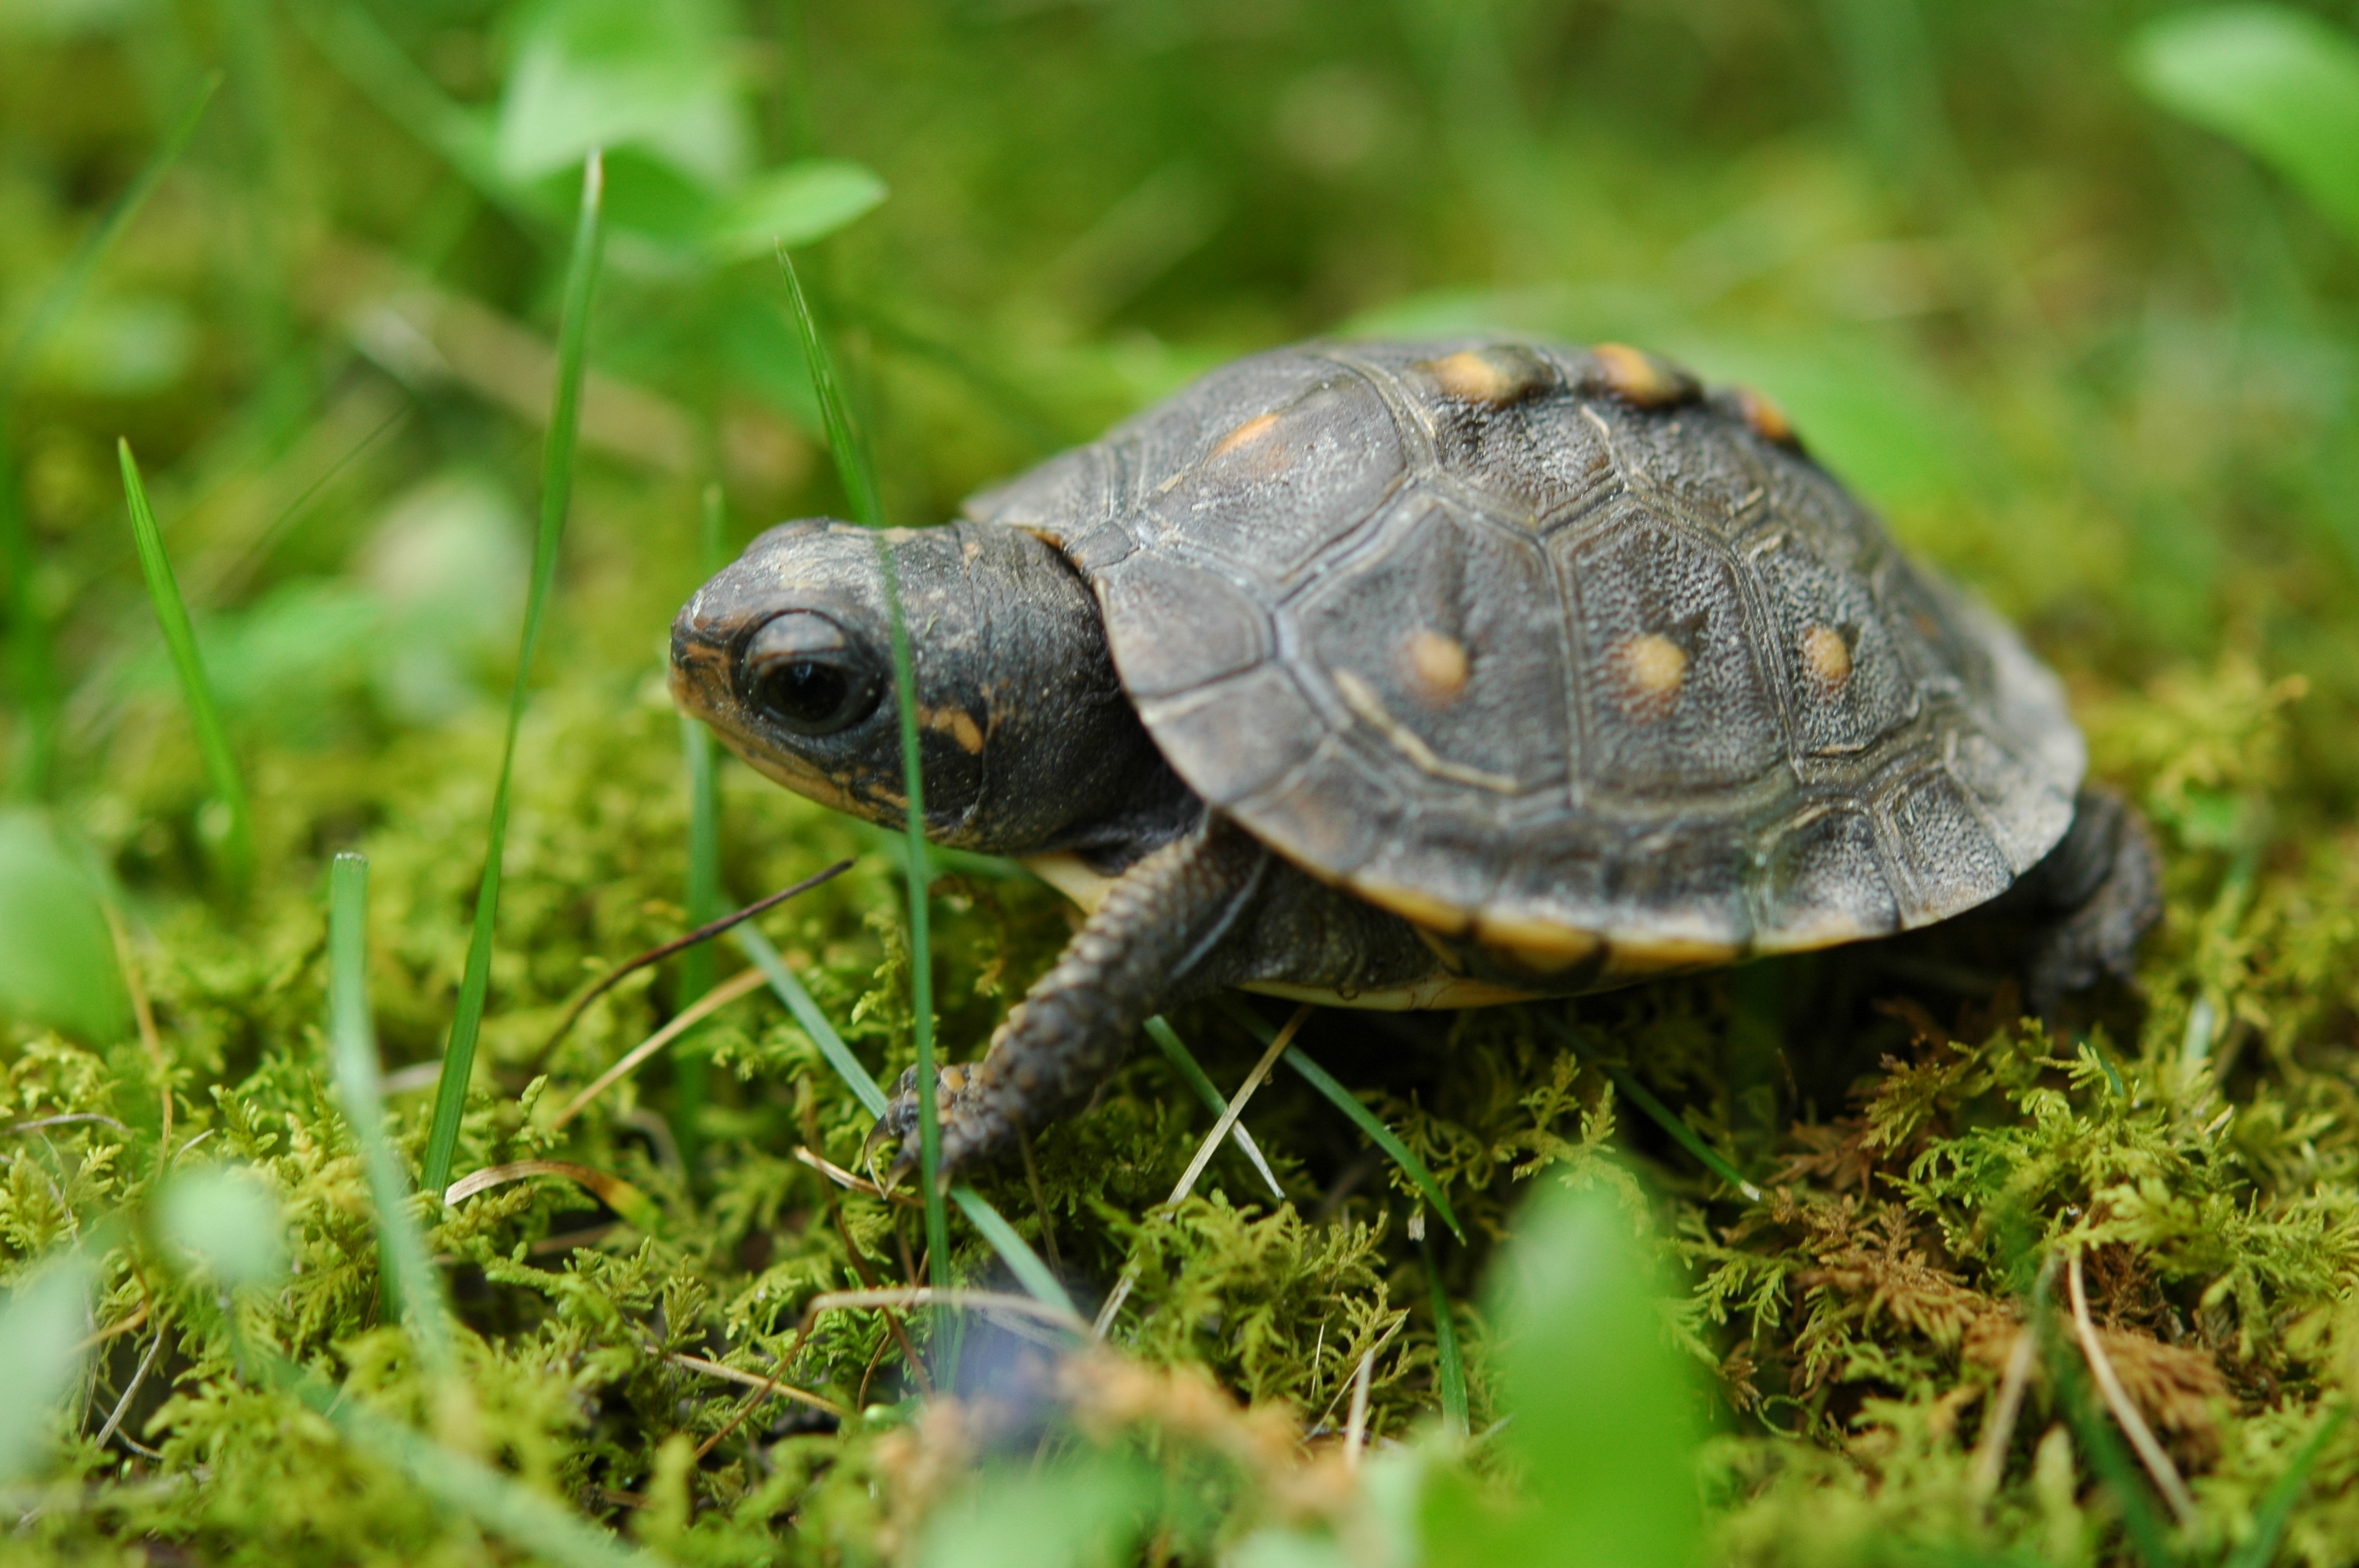 World Turtle Day celebration will include turtle races | Shelton ...